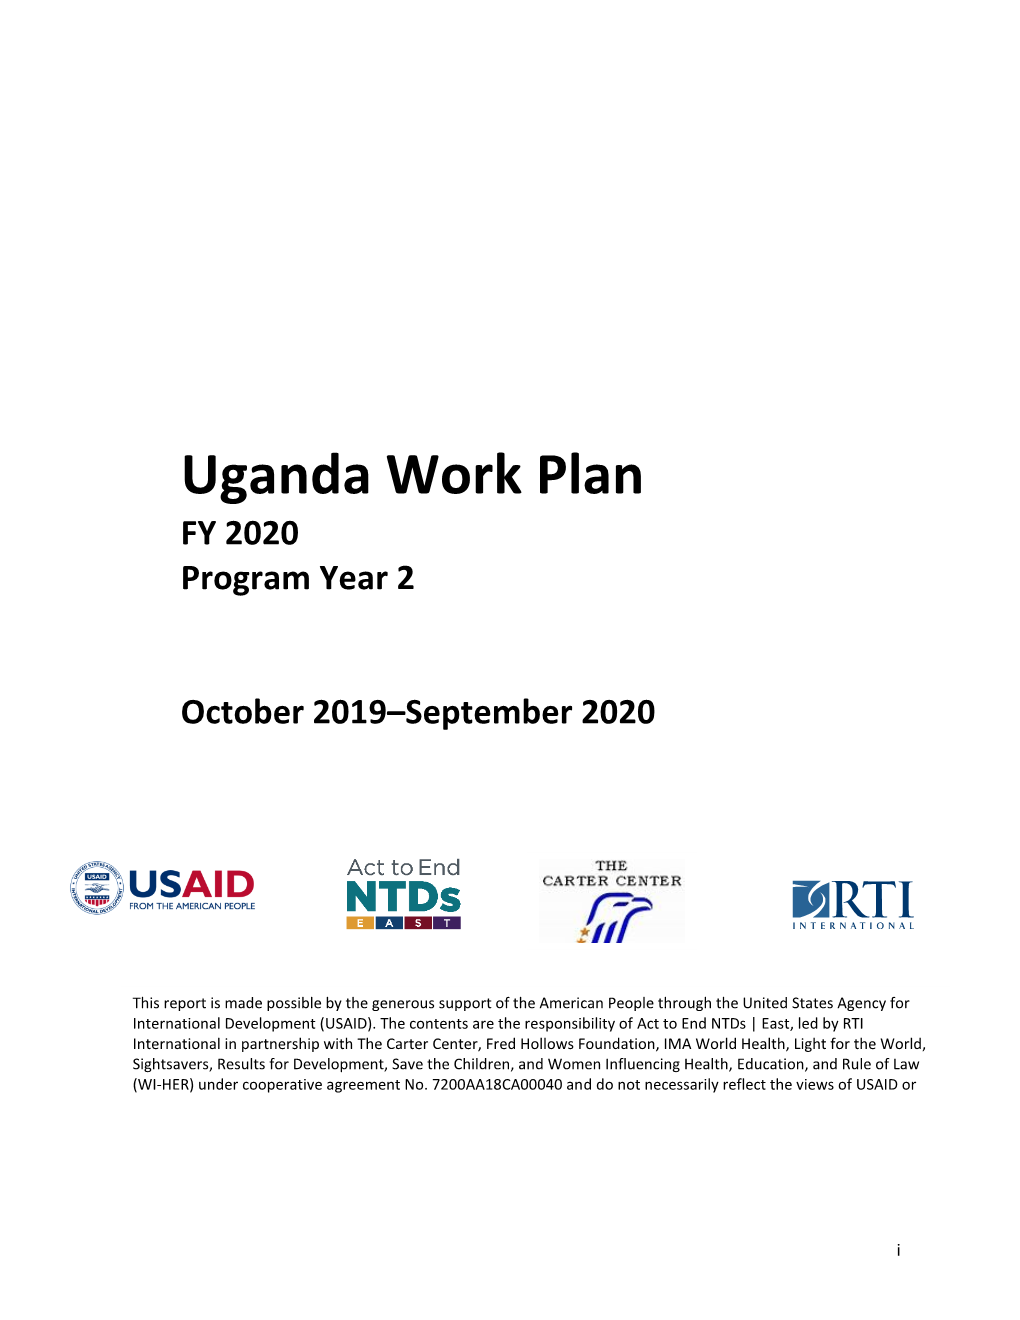 Uganda Work Plan FY 2020 Program Year 2